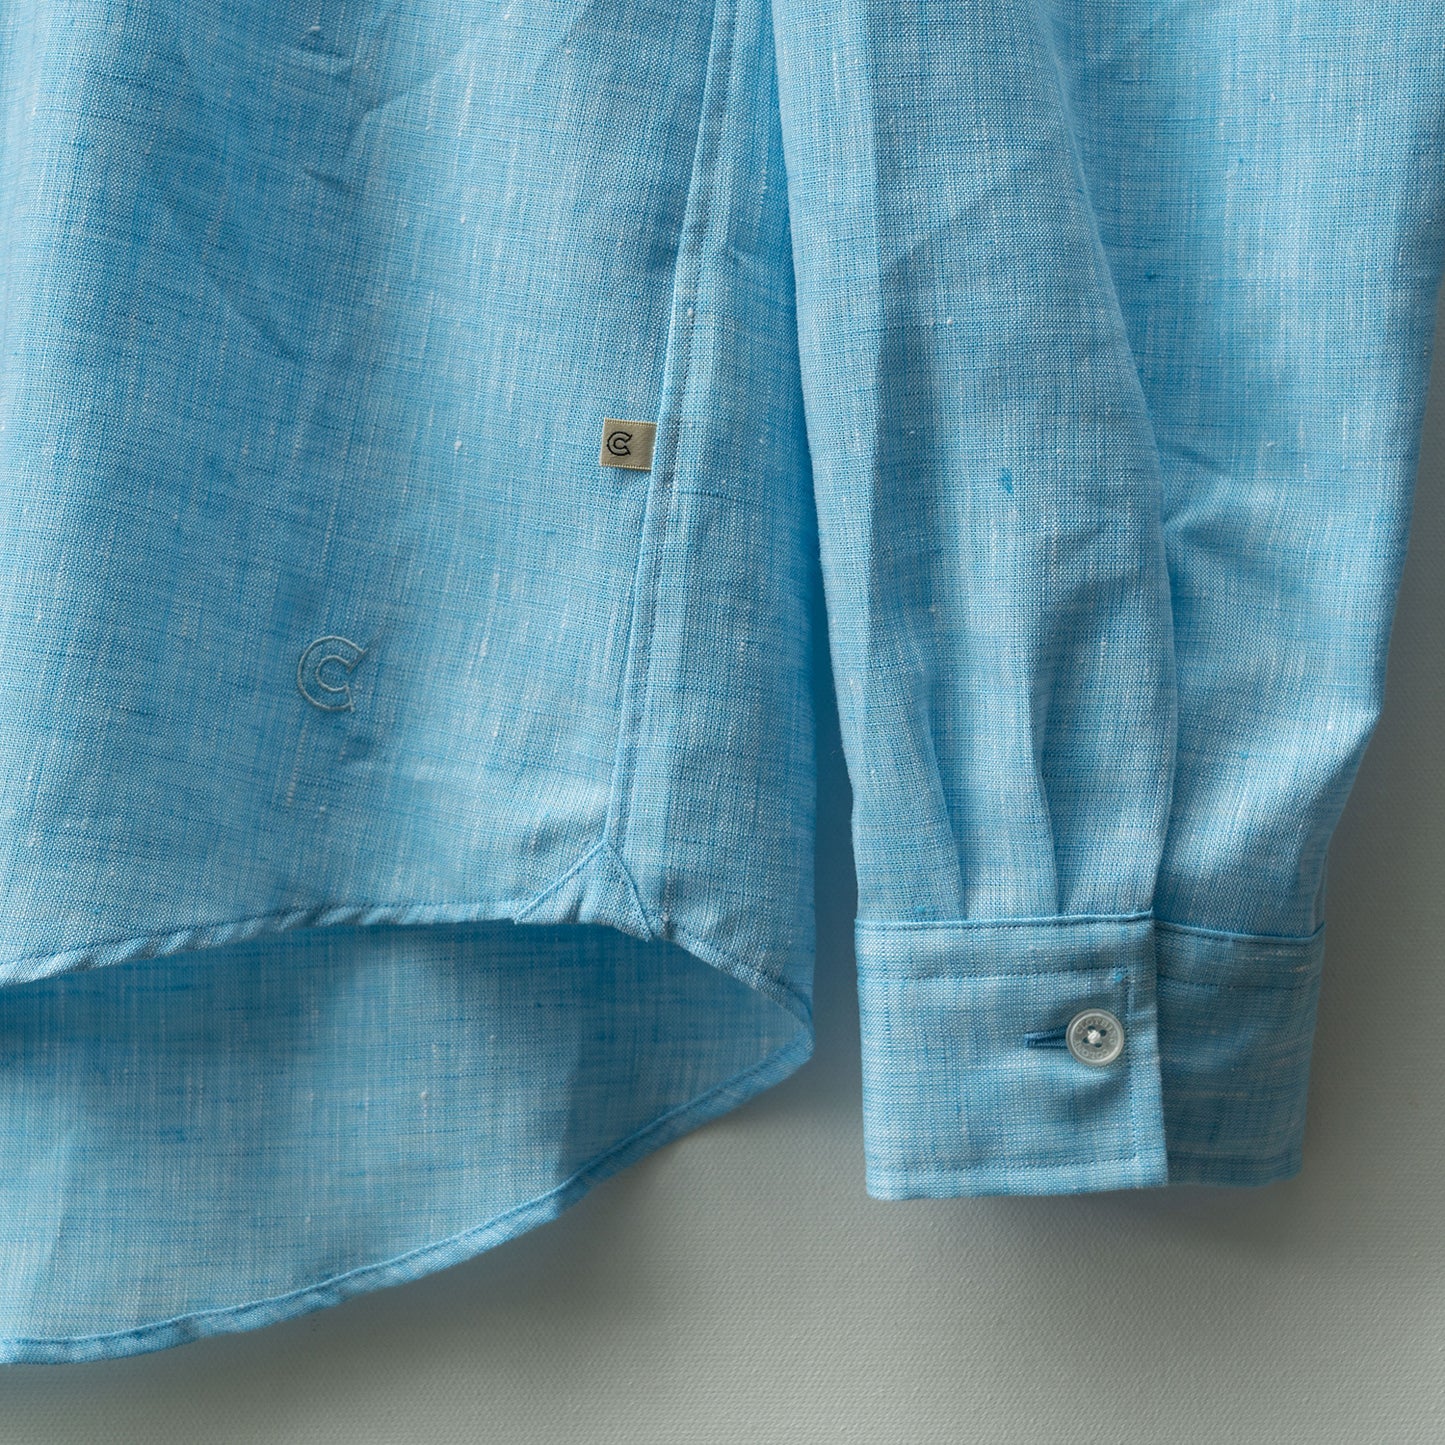 COLONY CLOTHING / ALBINI リネン プールサイドシャツ / CC2301-SH02-01